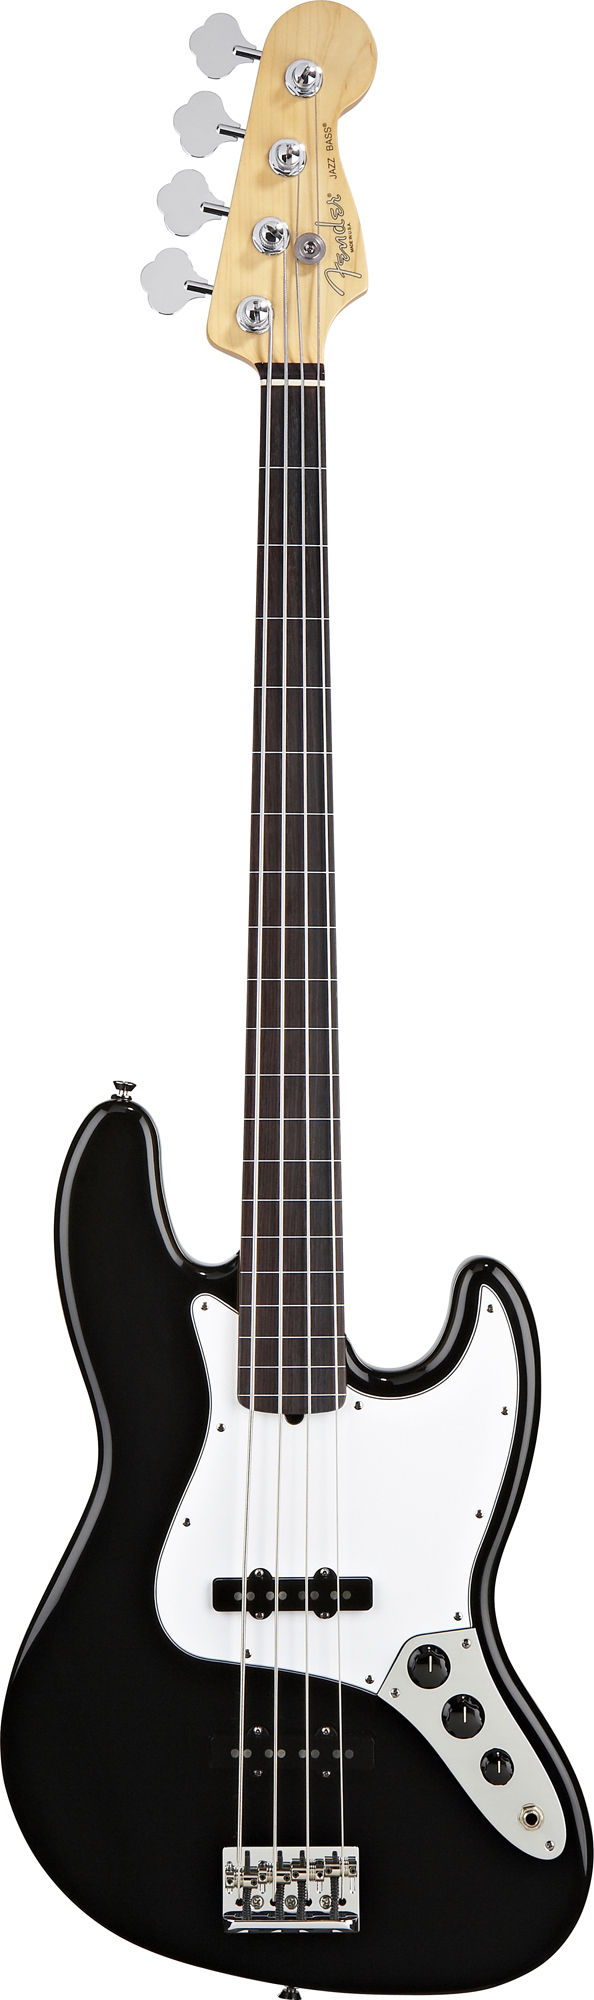 American Standard Jazz Bass Fretless